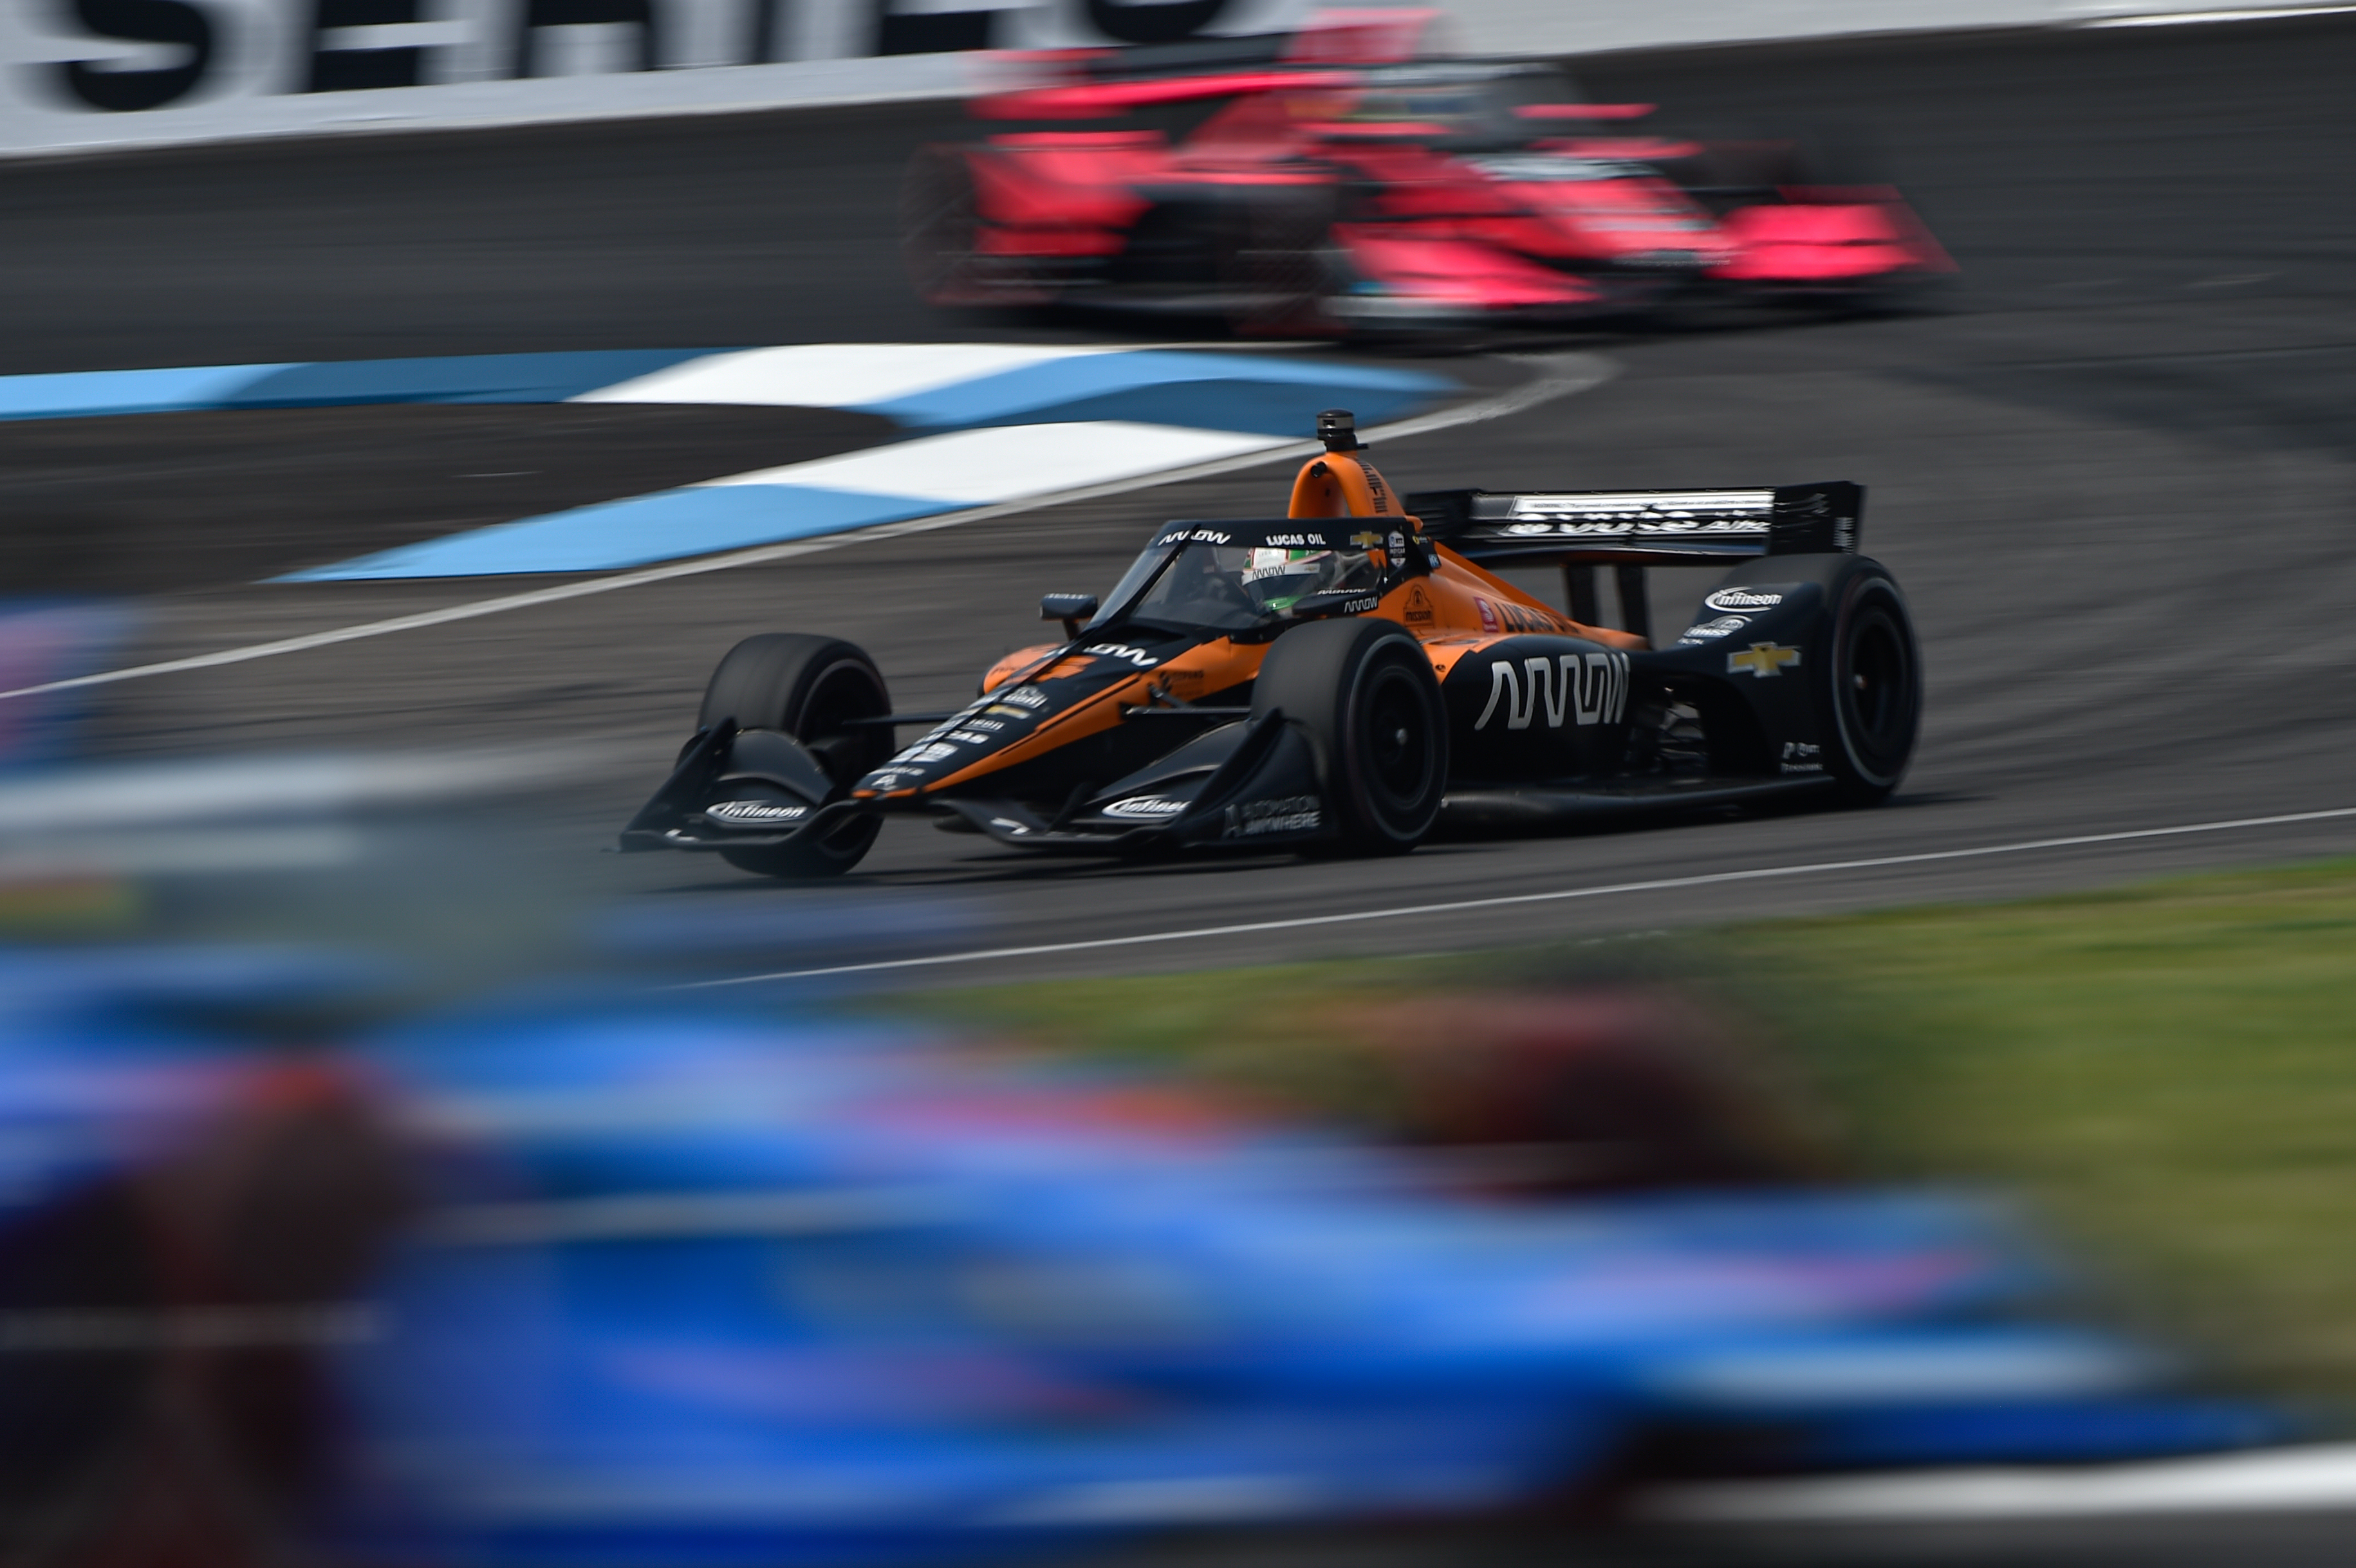 Pato O'Ward McLaren SP Indianapolis IndyCar 2020